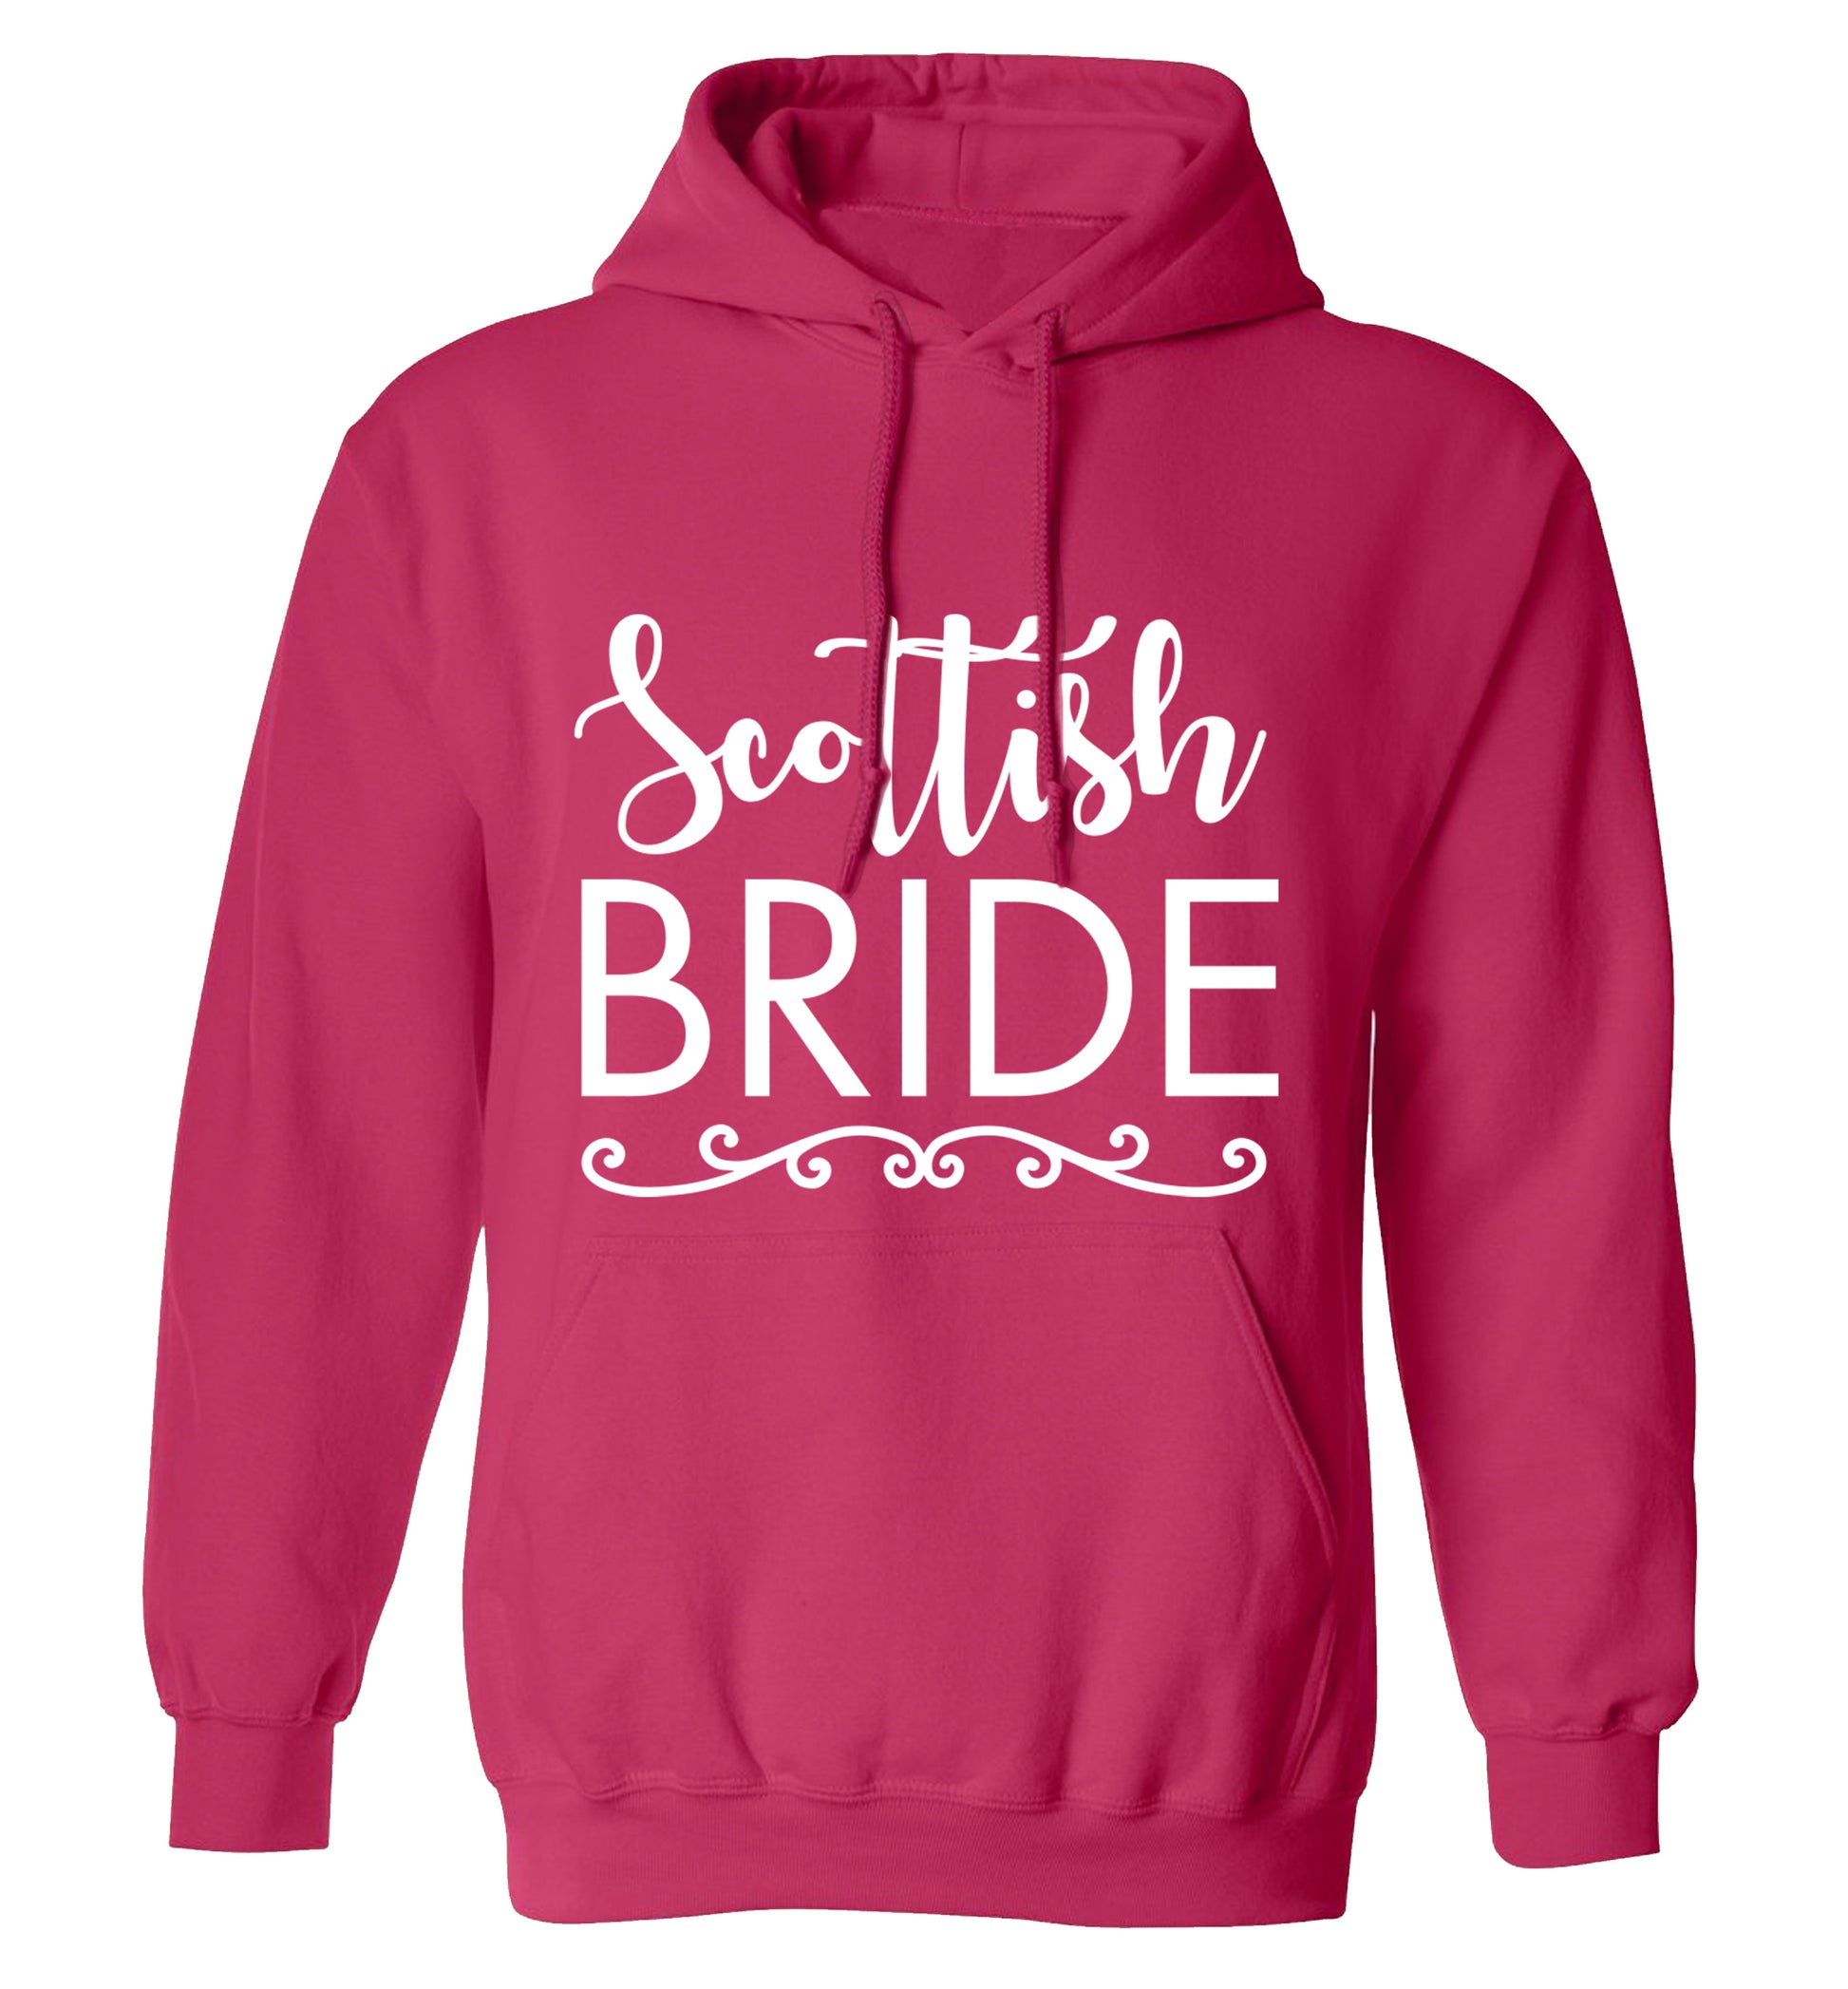 Scottish Bride adults unisex pink hoodie 2XL